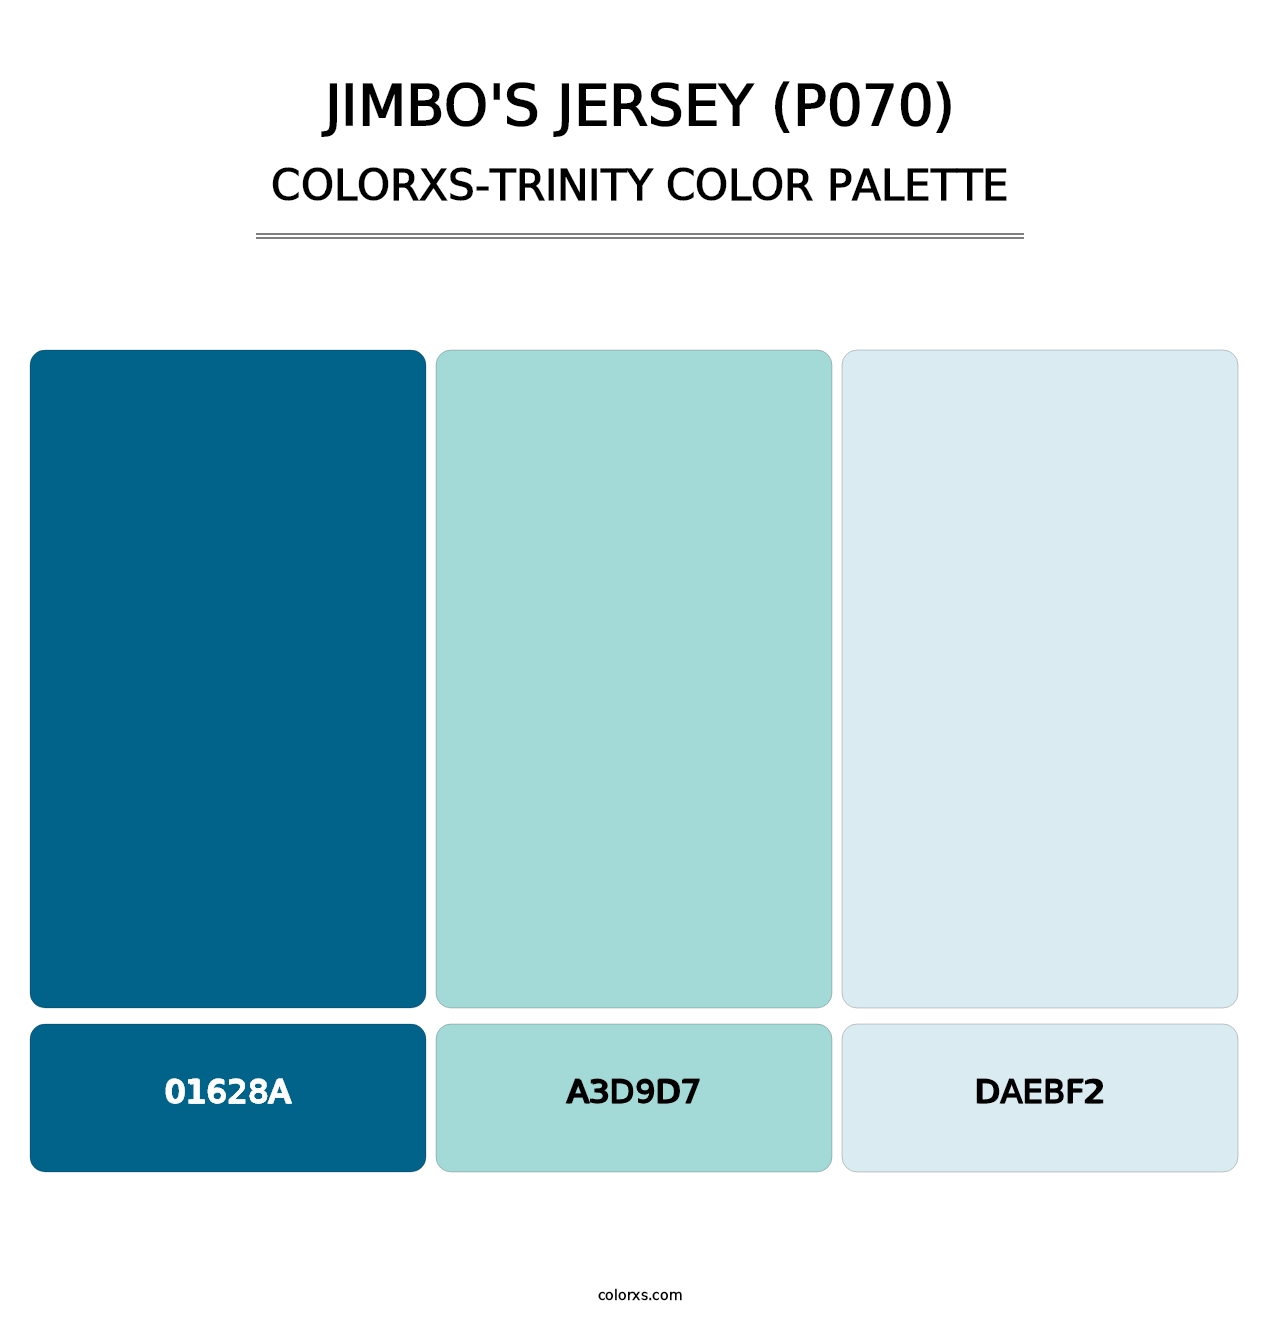 Jimbo's Jersey (P070) - Colorxs Trinity Palette